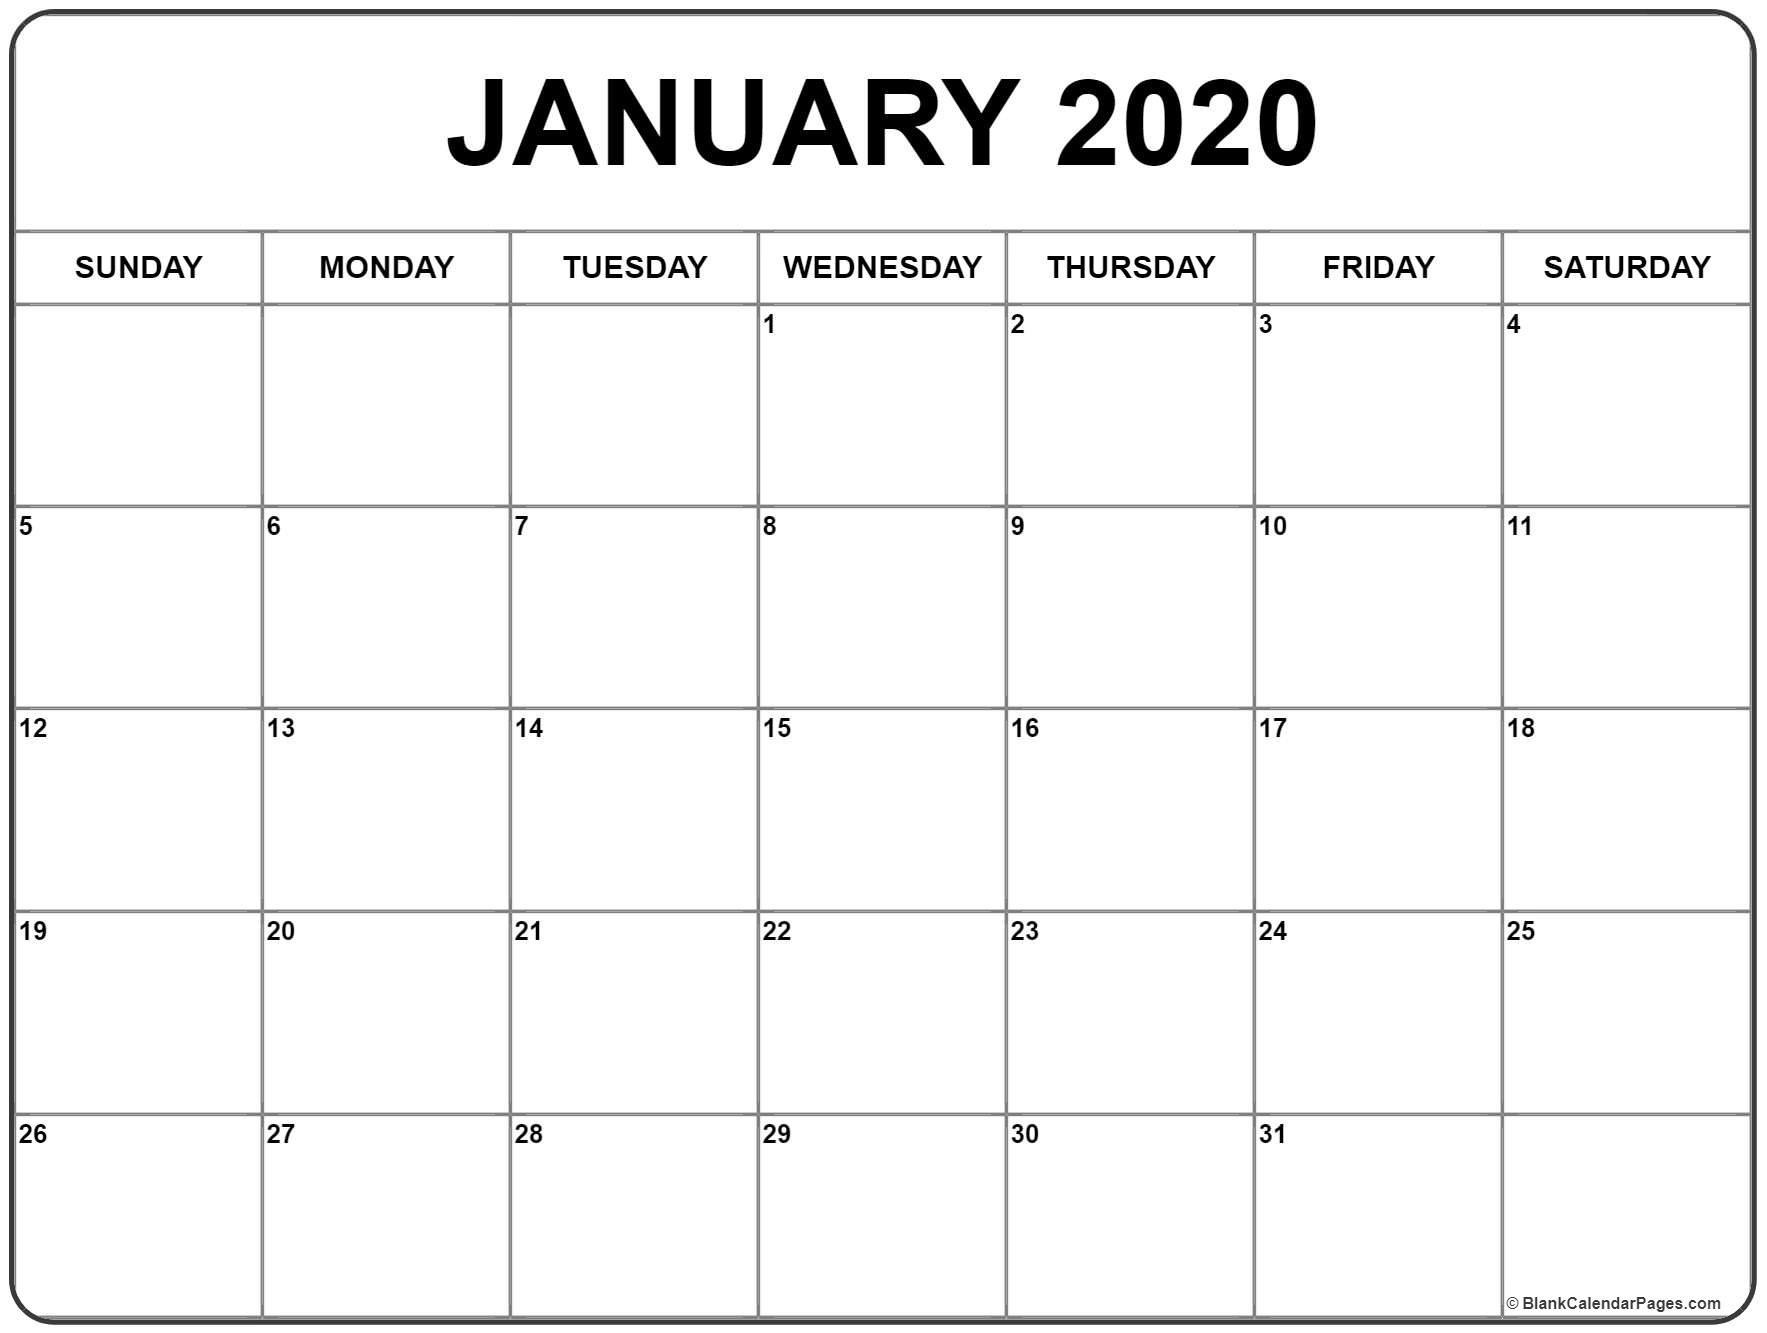 January 2020 Calendar | Free Printable Monthly Calendars-January Through June 2020 Calendar